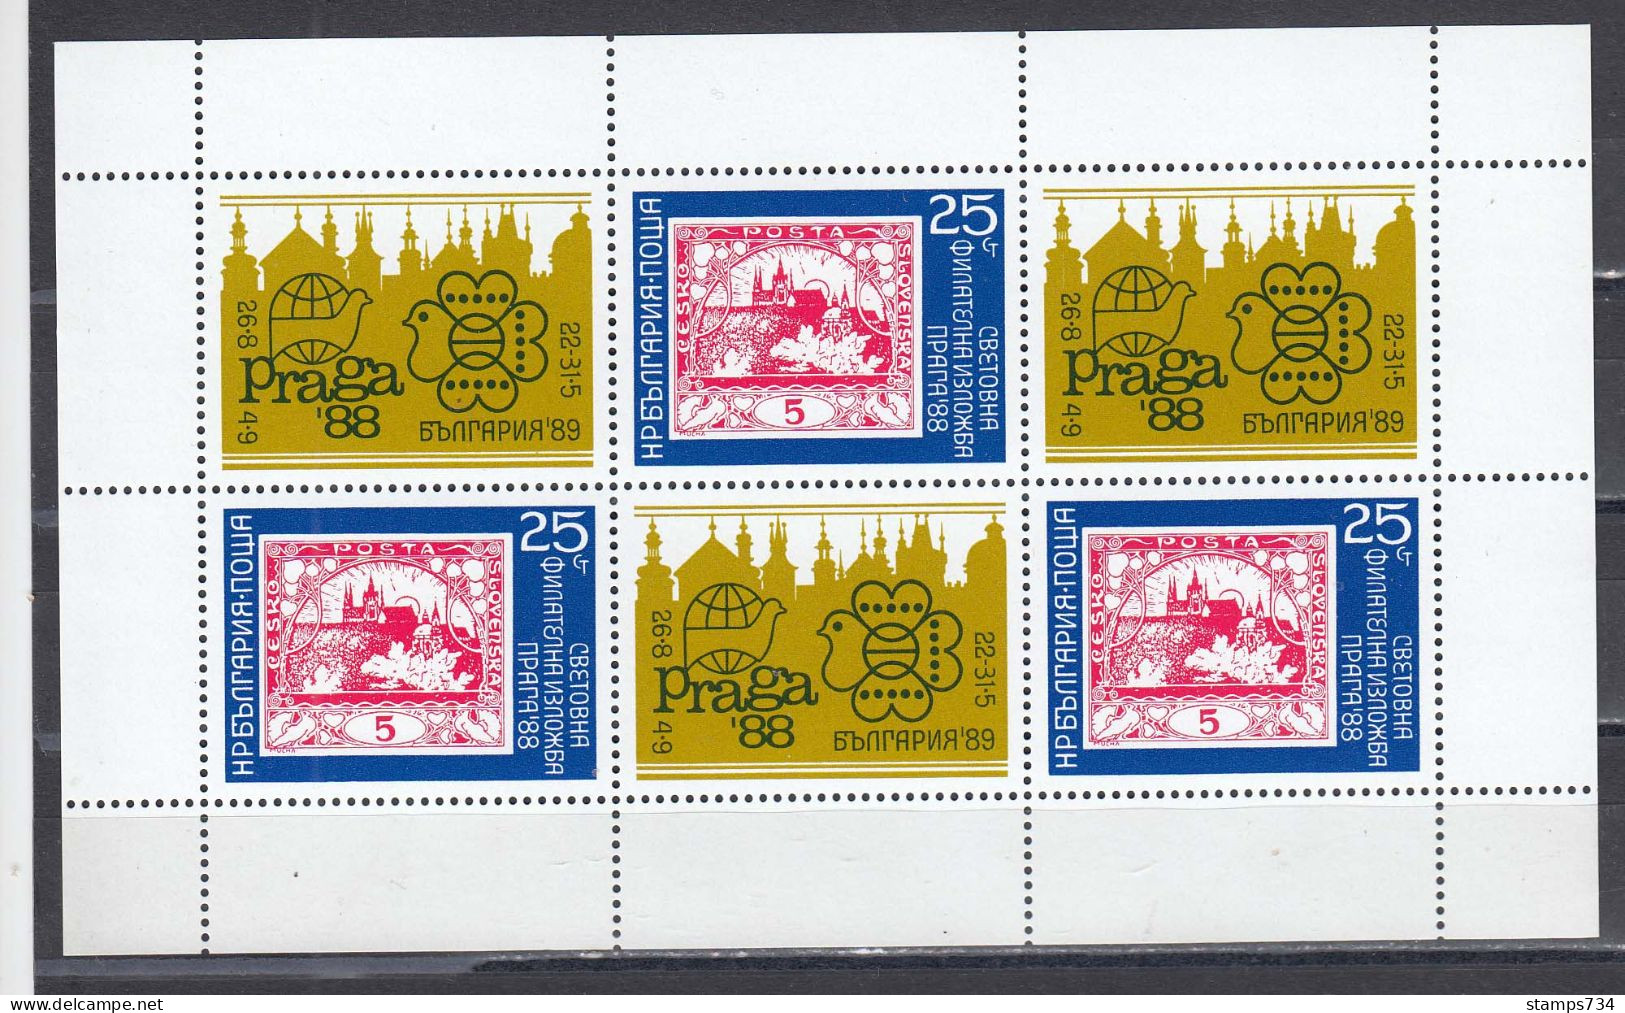 Bulgaria 1989 - International Stamp Exhibition PRAGA'88, Mi-Nr. Bl. 185, Imperforated, MNH** - Unused Stamps